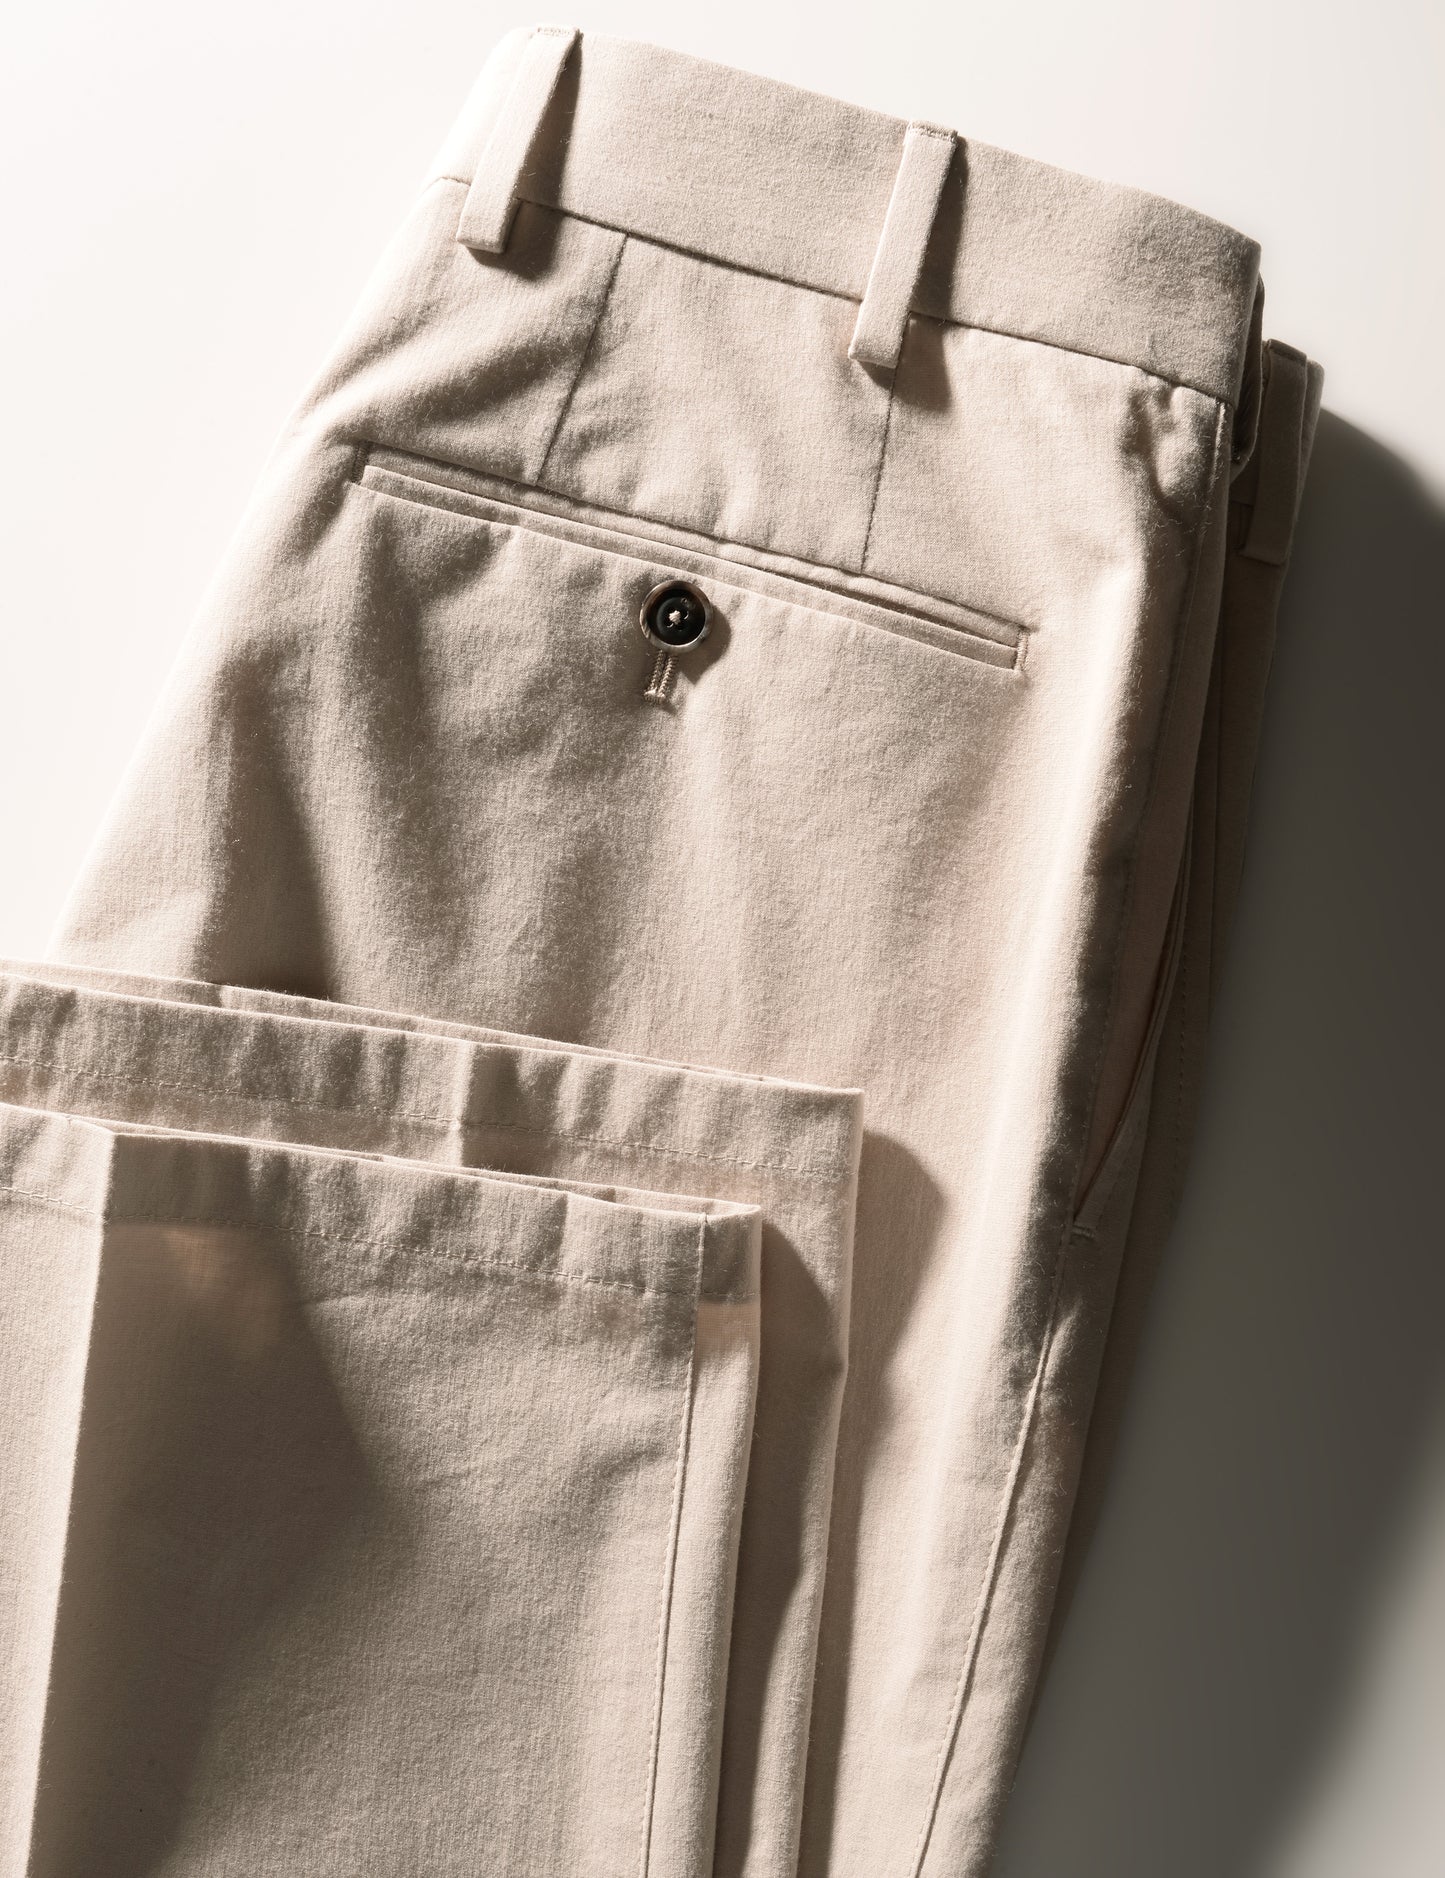 Detail showing back of folded Brooklyn Tailors BKT36 Straight Leg Pant in Crisp Cotton Blend - Desert Sand showing back pocket, hem, and waistband